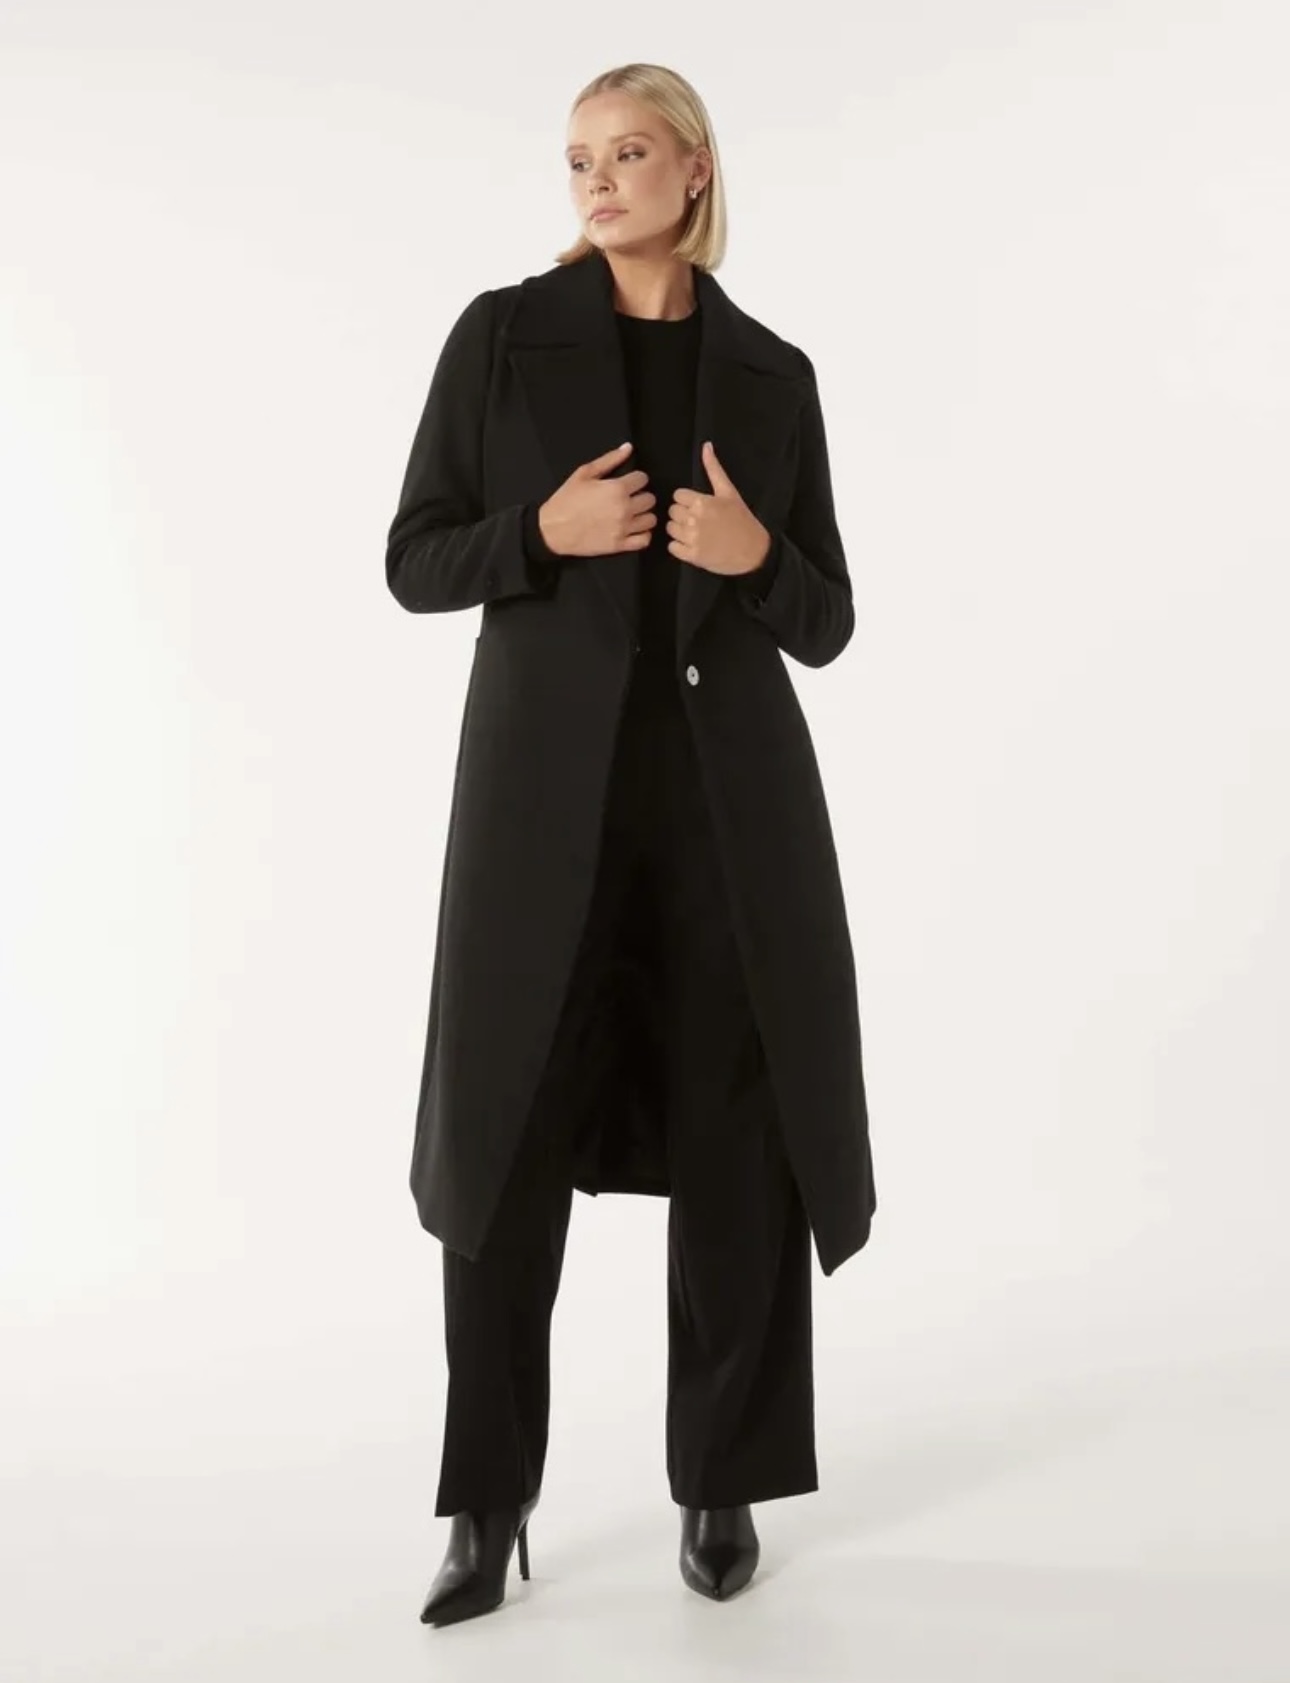 Woman wearing a long black coat, black dress pants and black high heels